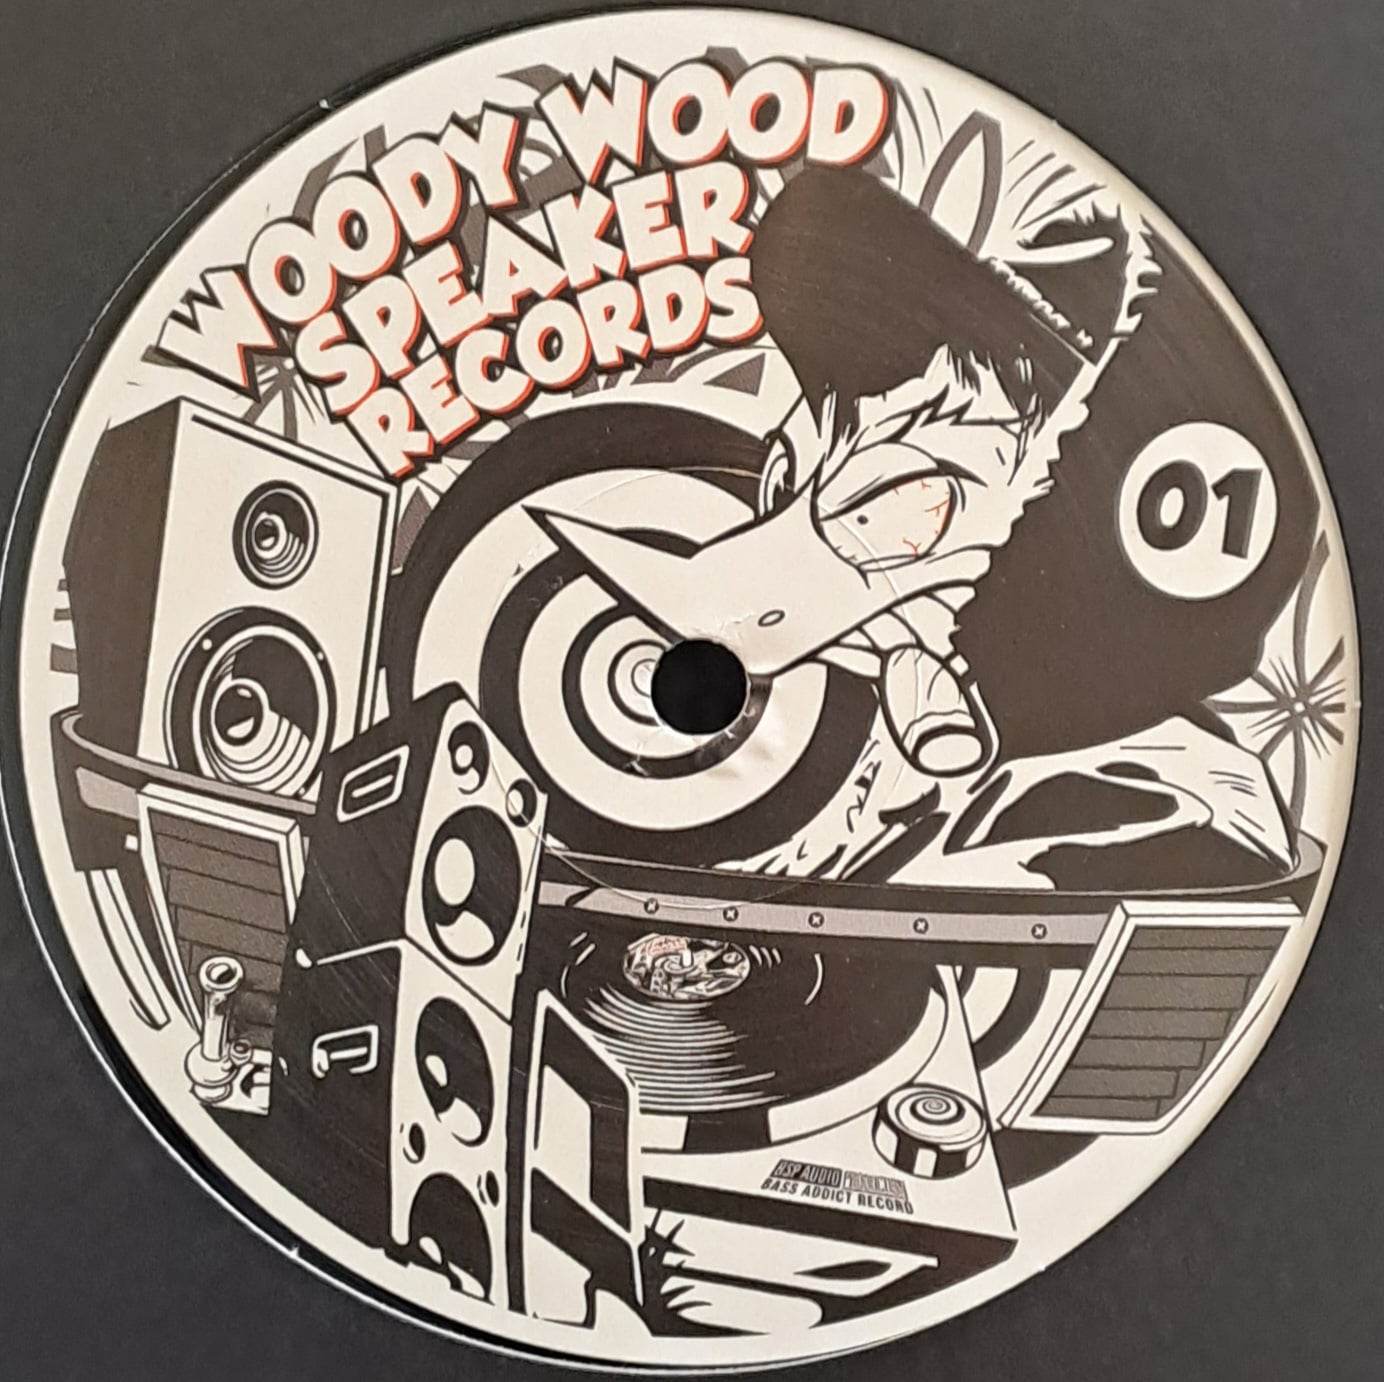 Woody Wood Speaker Records 01 (dernières copies en stock) - vinyle freetekno